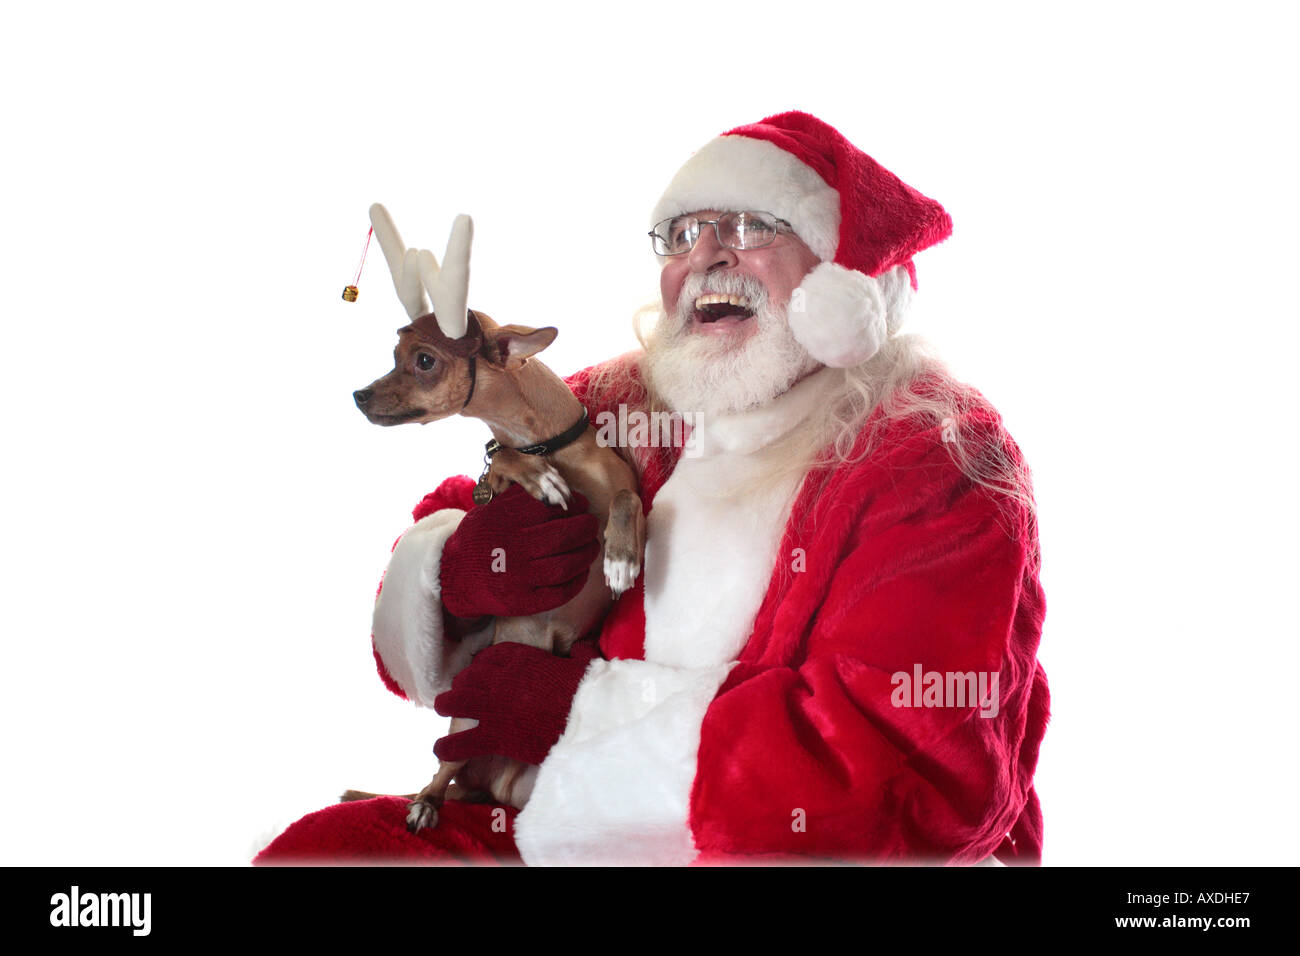 Santa with a funny small dog Stock Photo